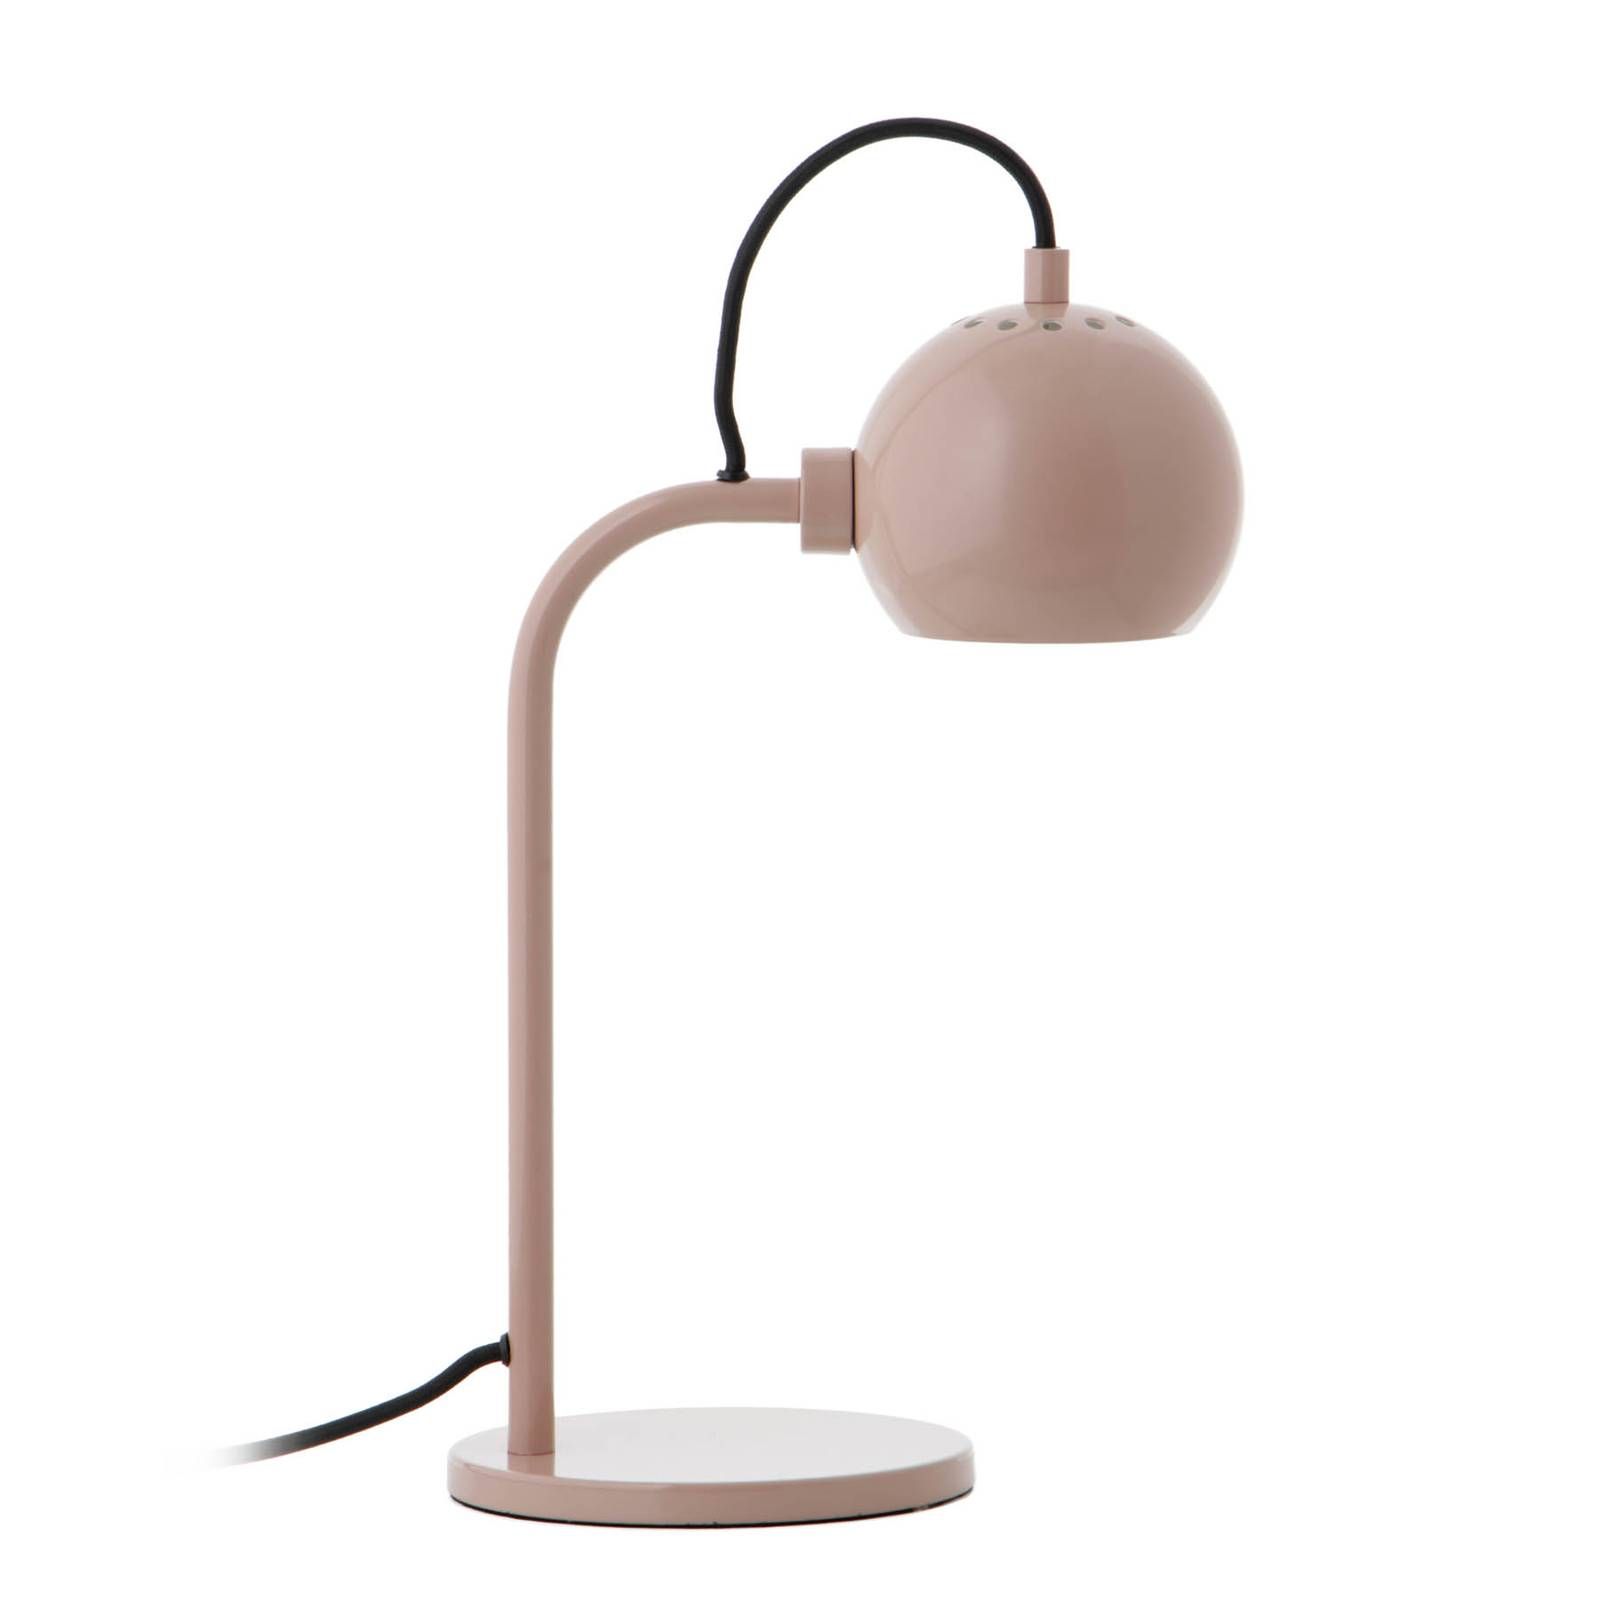 FRANDSEN Ball Single stolová lampa, nude, Obývacia izba / jedáleň, kov, E14, 25W, L: 16 cm, K: 37cm